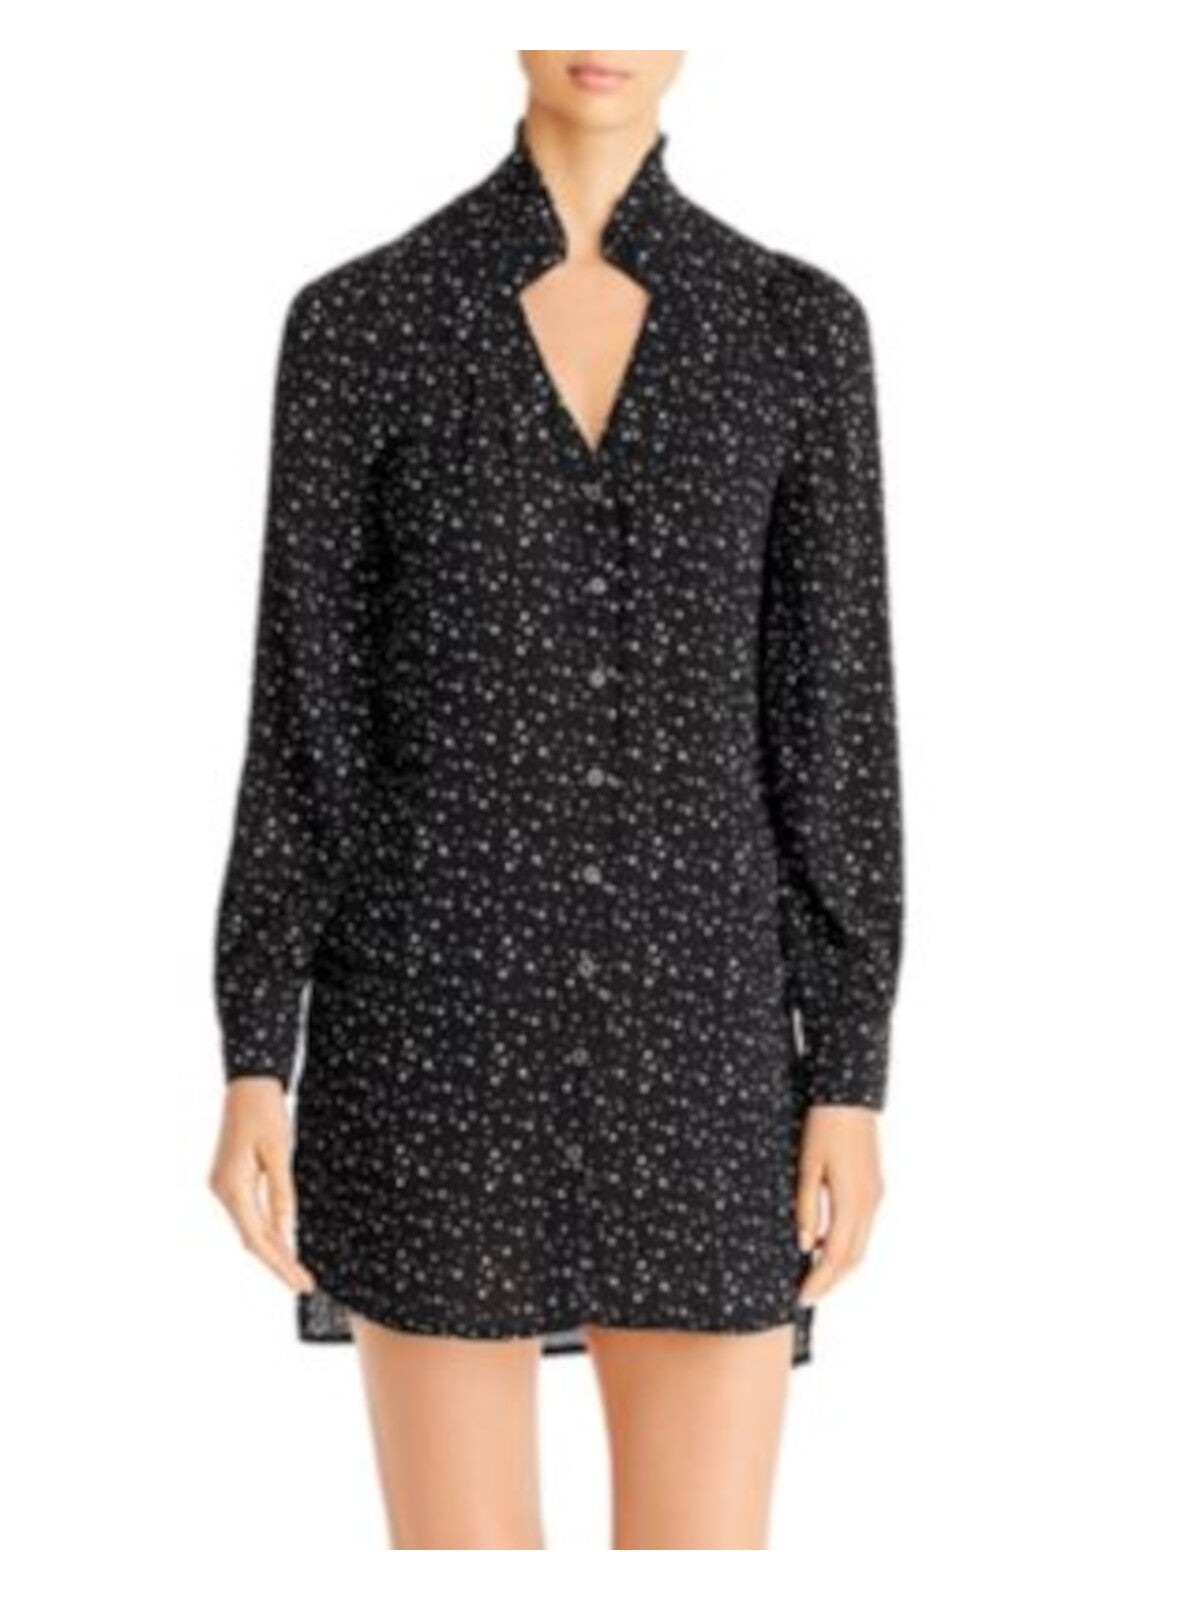 BILLY T Womens Black Textured High-collar V-neck Cuffed Sleeve Mini Shirt Dress M